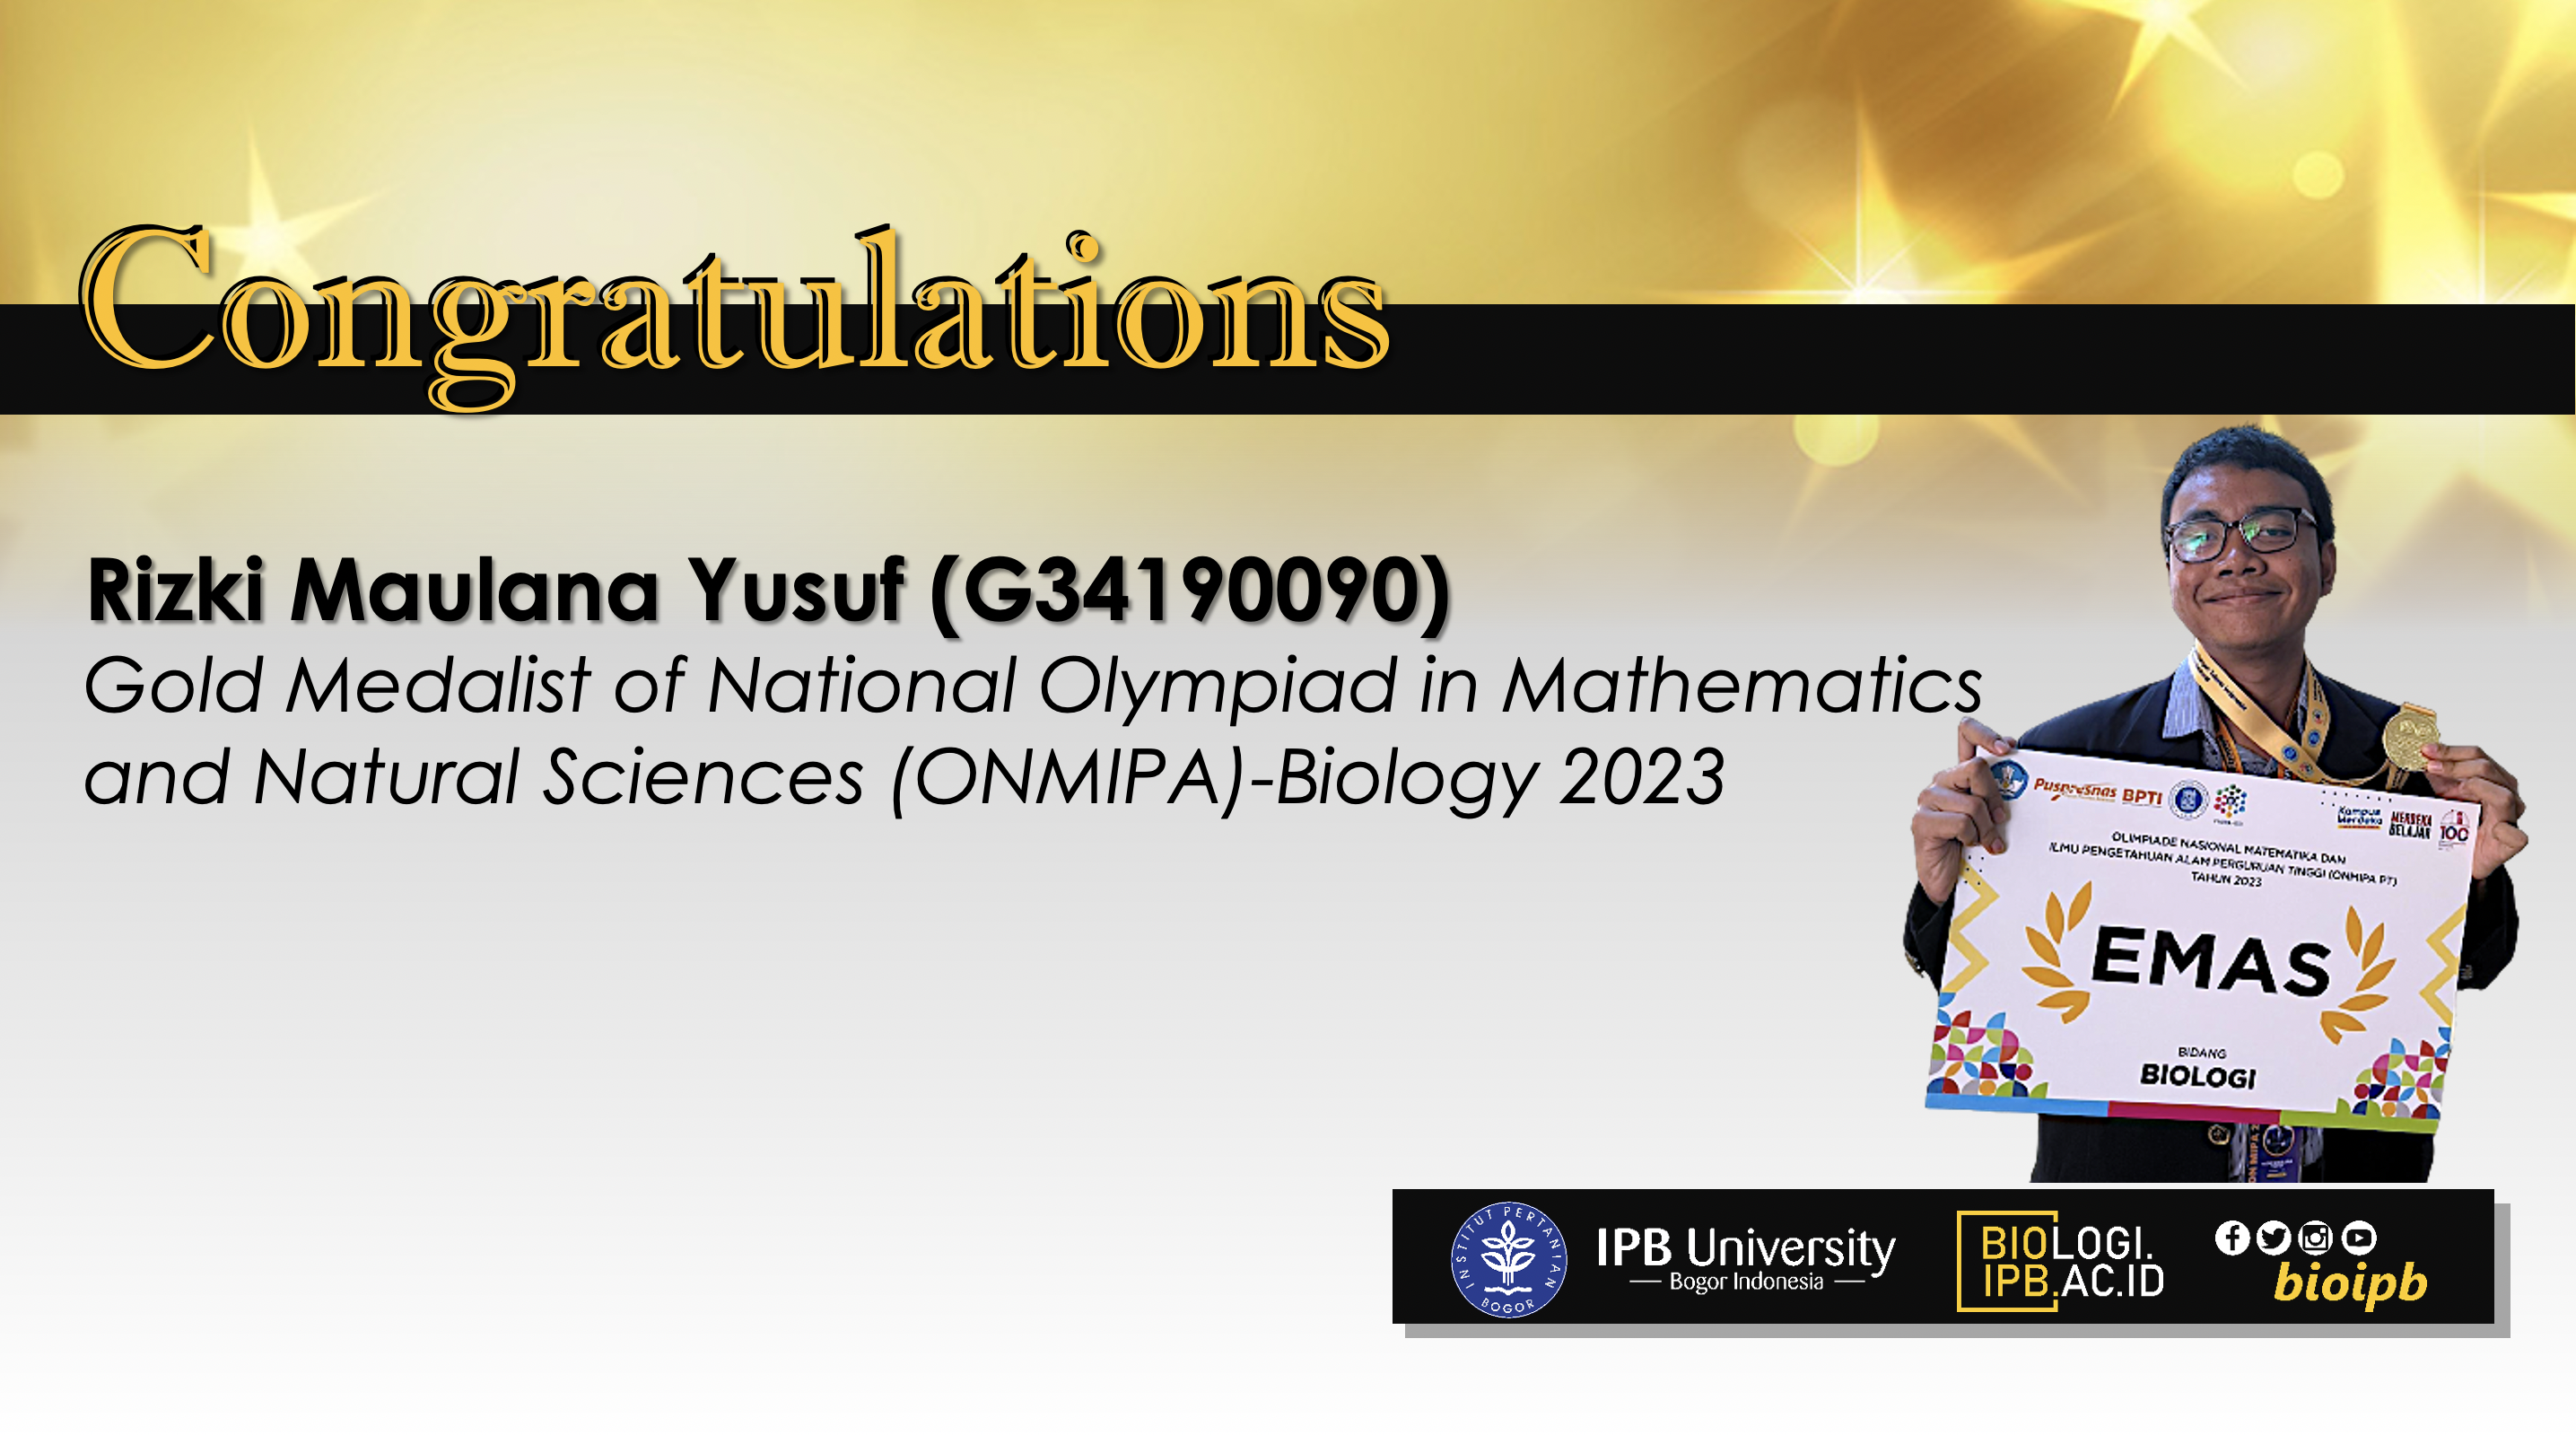 Congratulations to Rizki Maulana Yusuf